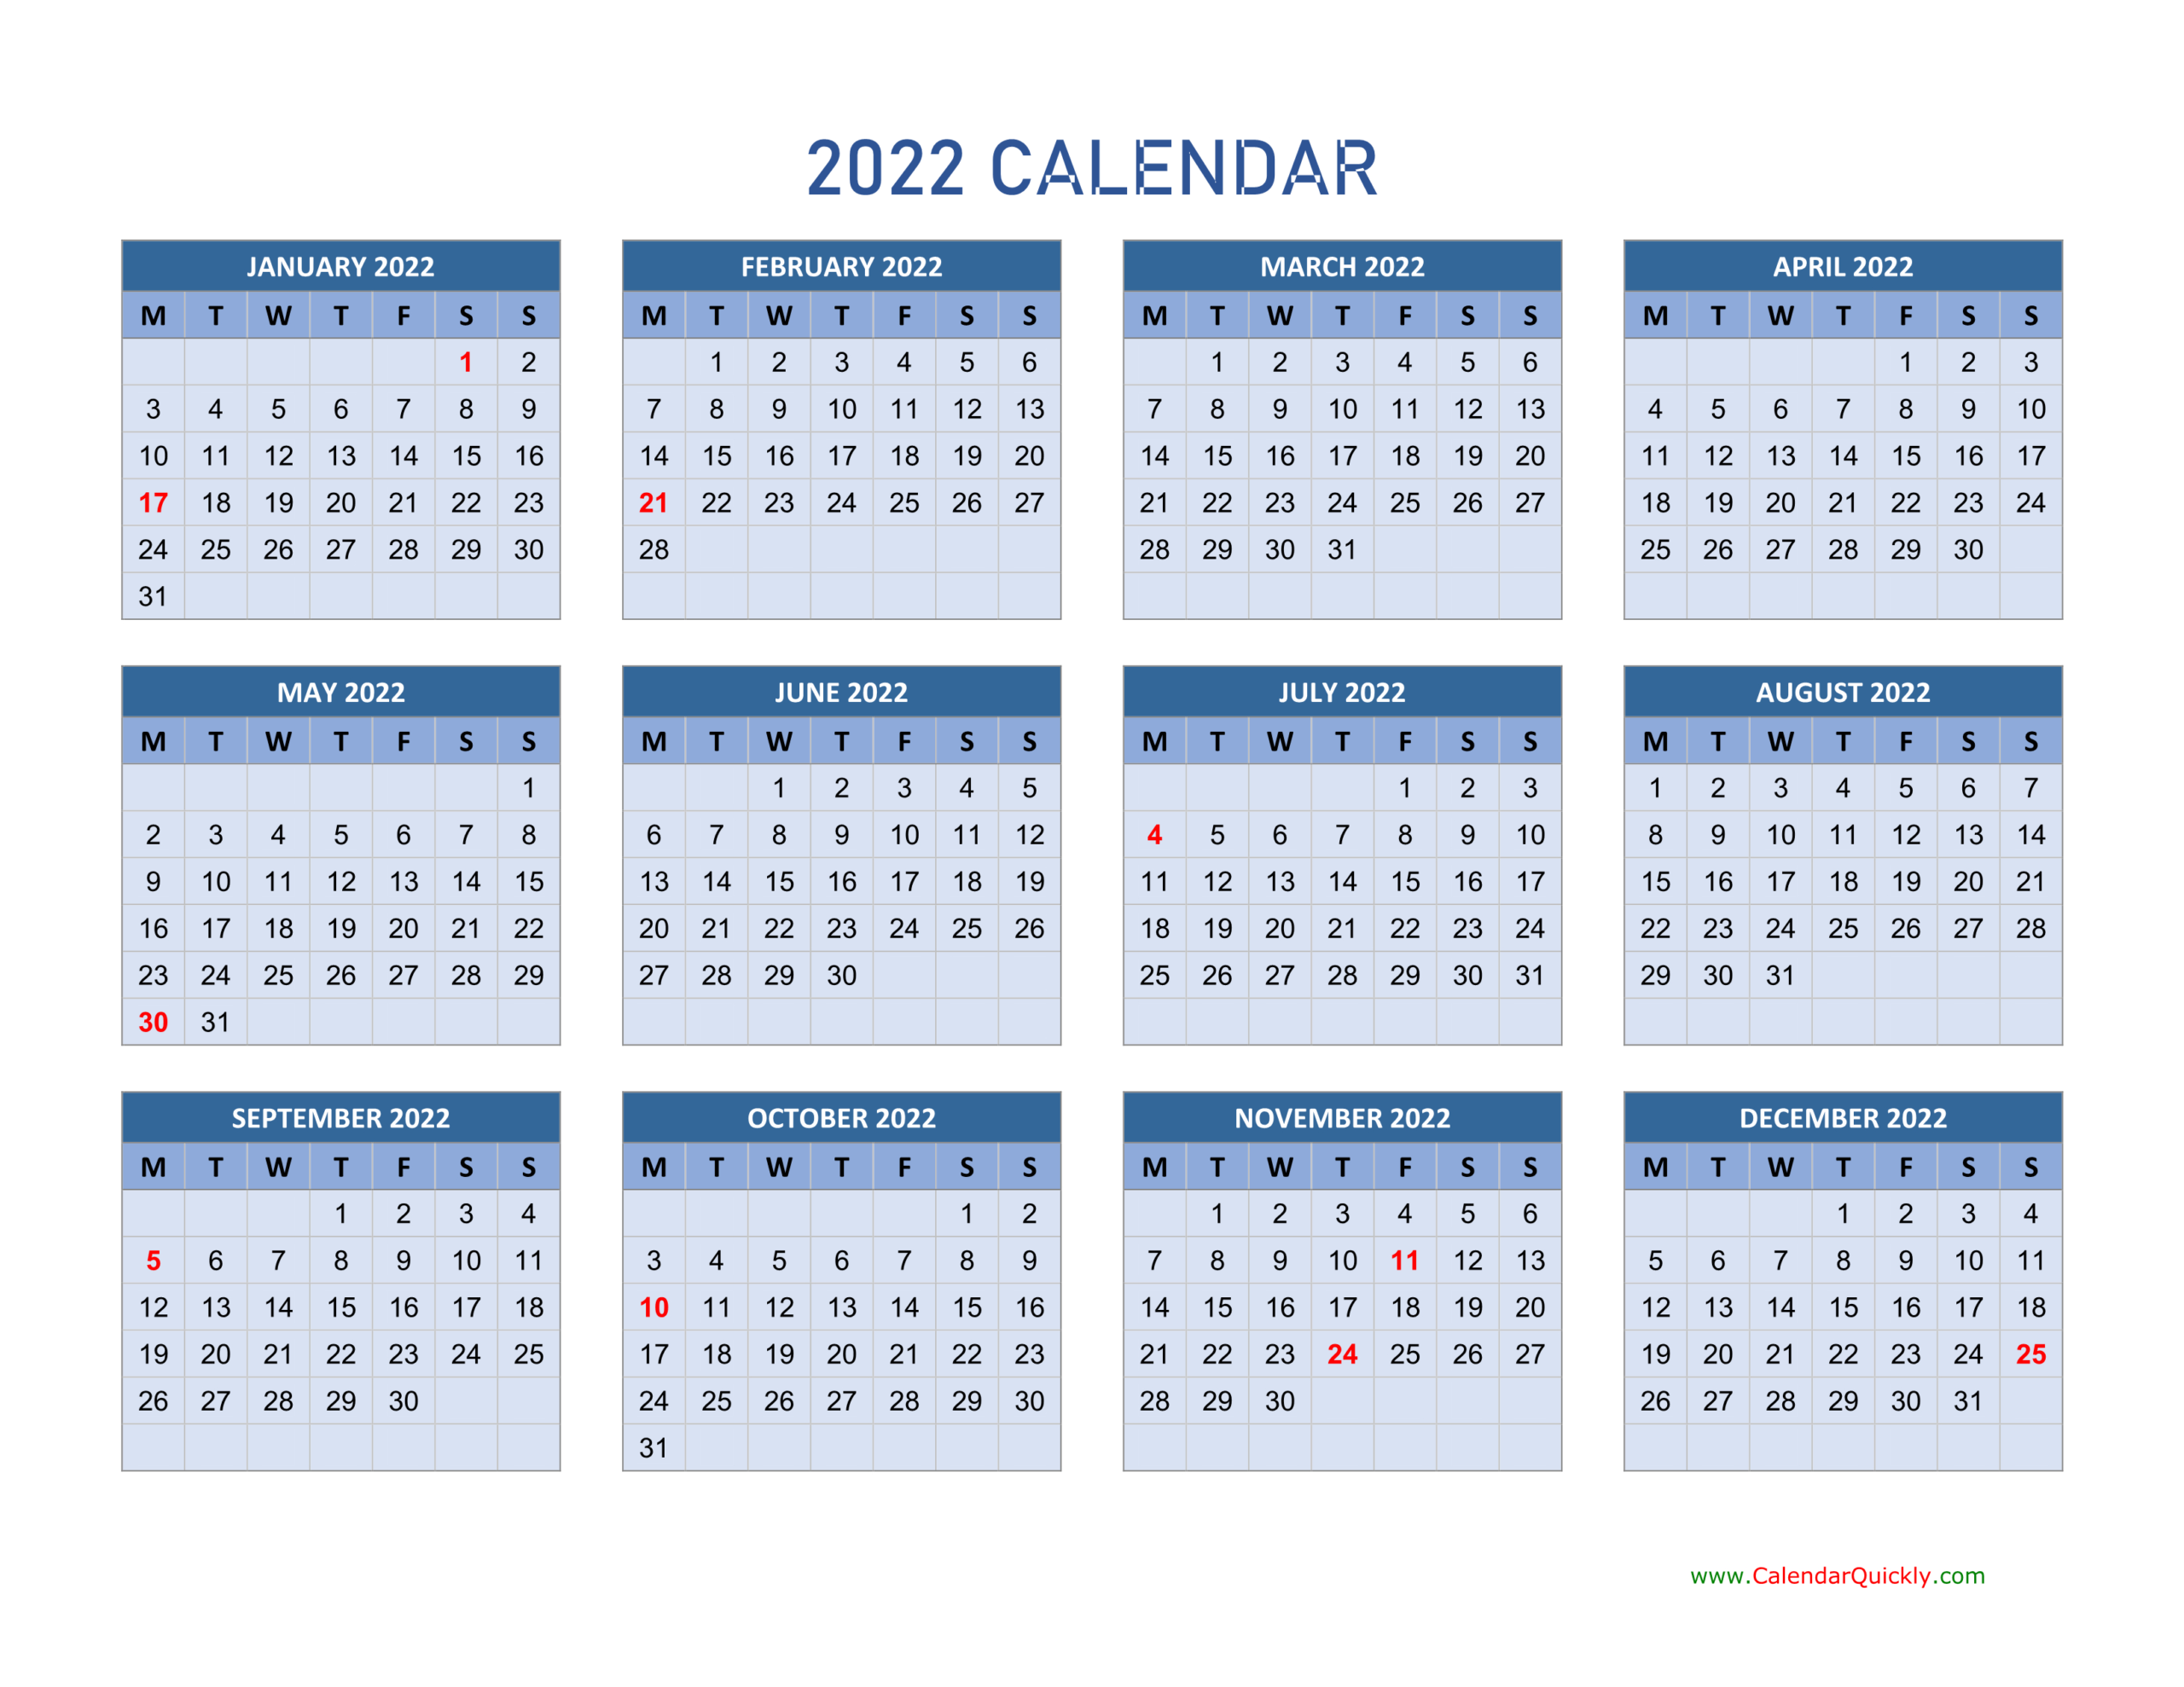 Monday 2022 Calendar Horizontal | Calendar Quickly  2022 Printable Calendar One Page Per Month